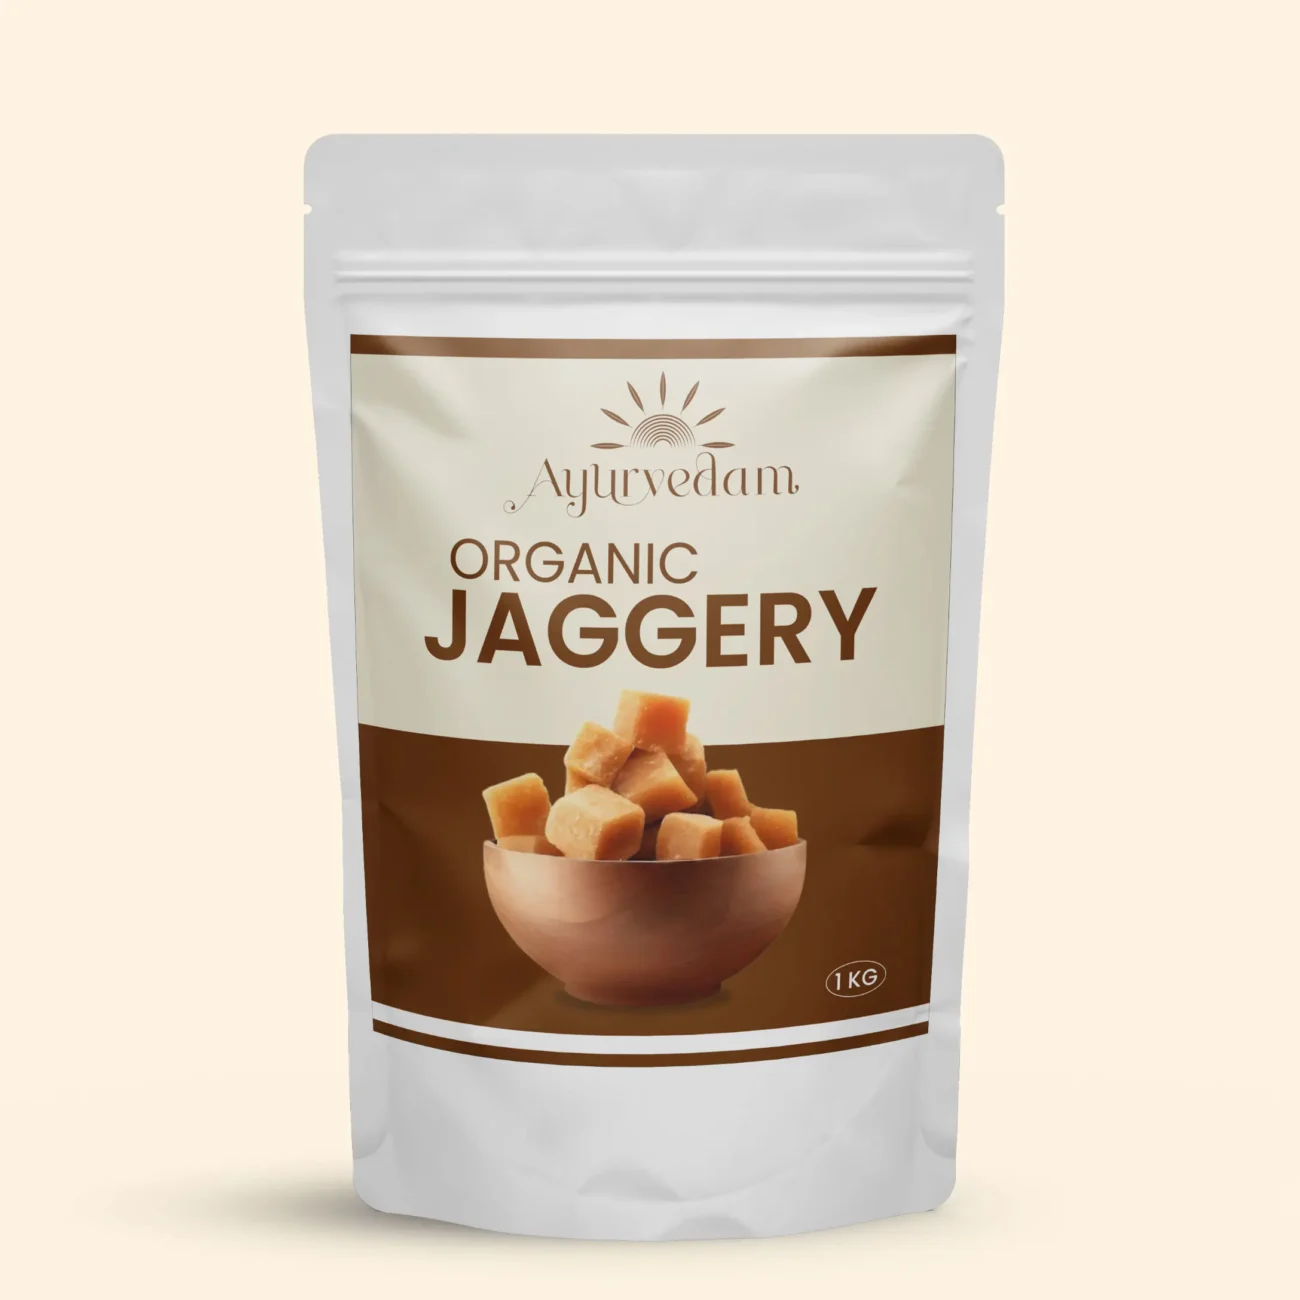 Buy Organic Jaggery online at Ayurvedam